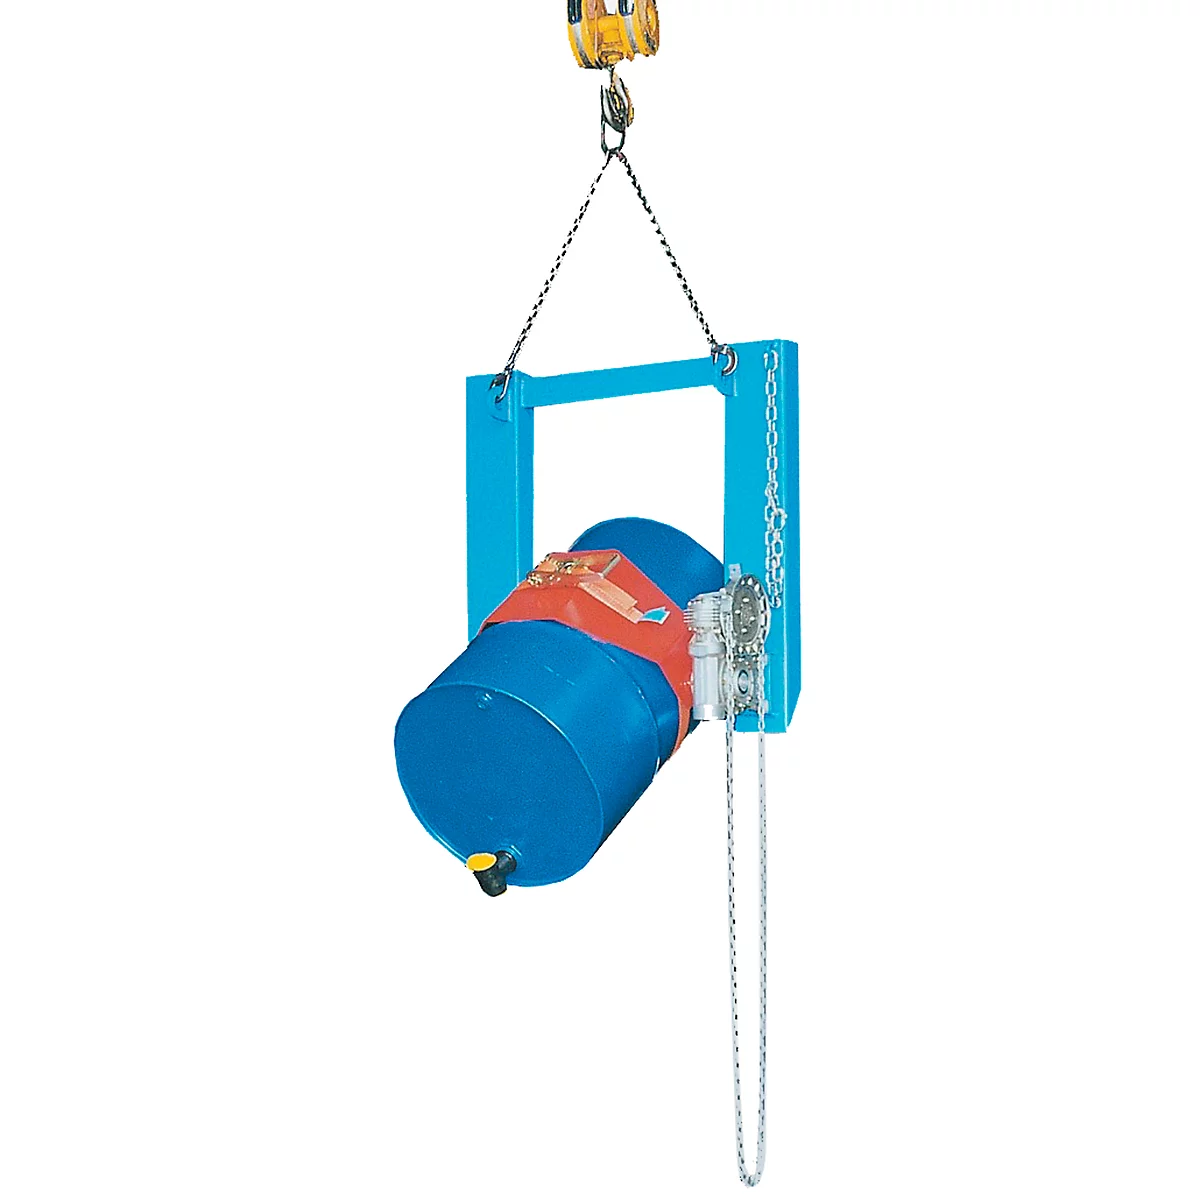 Volteador de barriles FLEX, con cadena, azul lacado